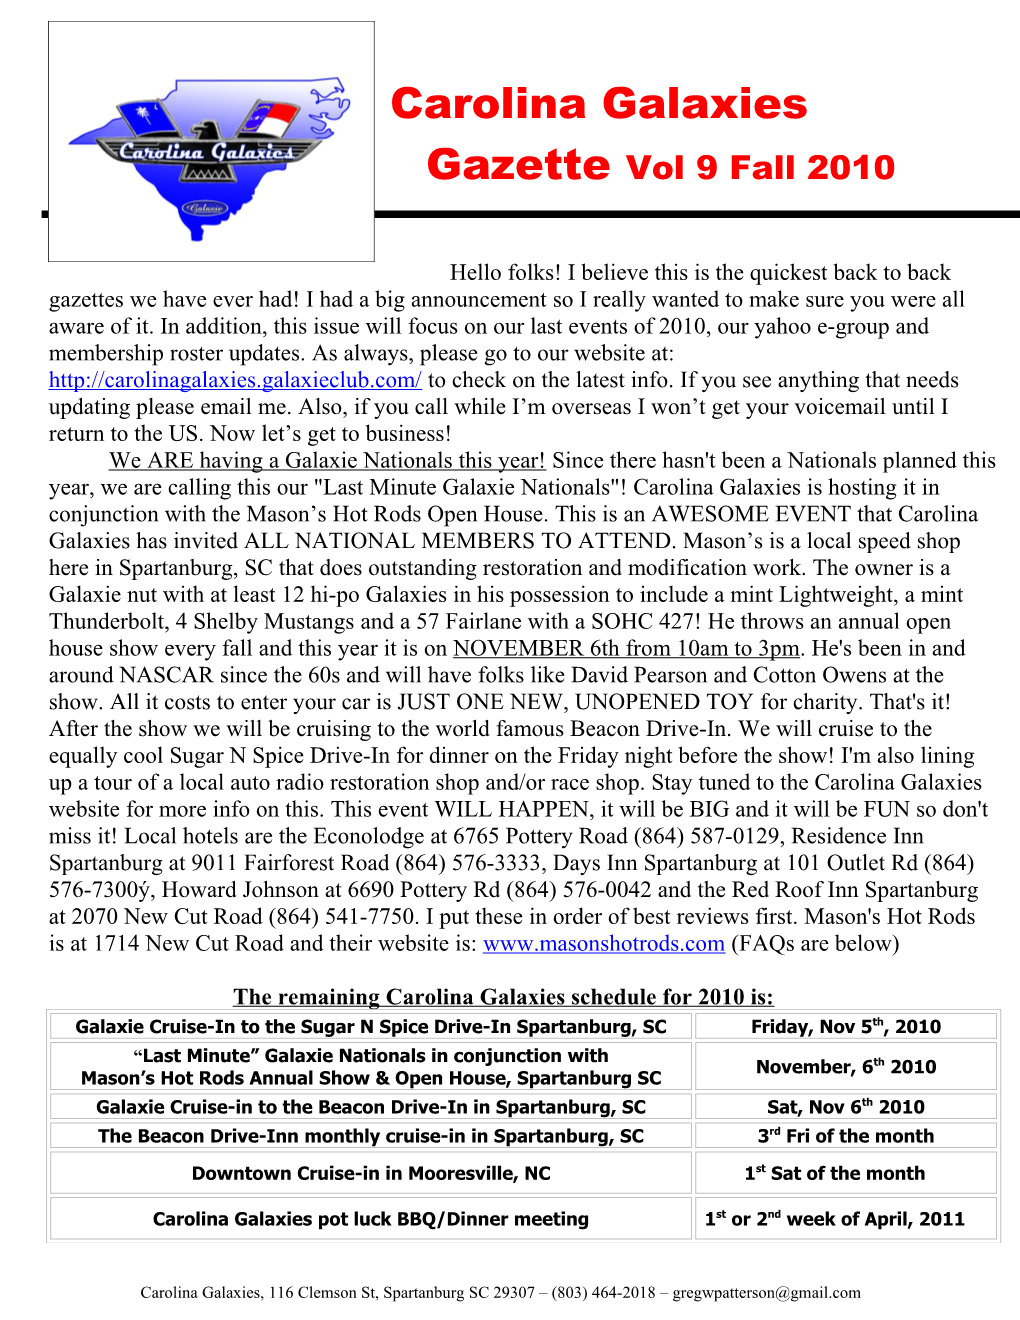 Carolina Galaxies Gazette Vol 9 Fall 2010